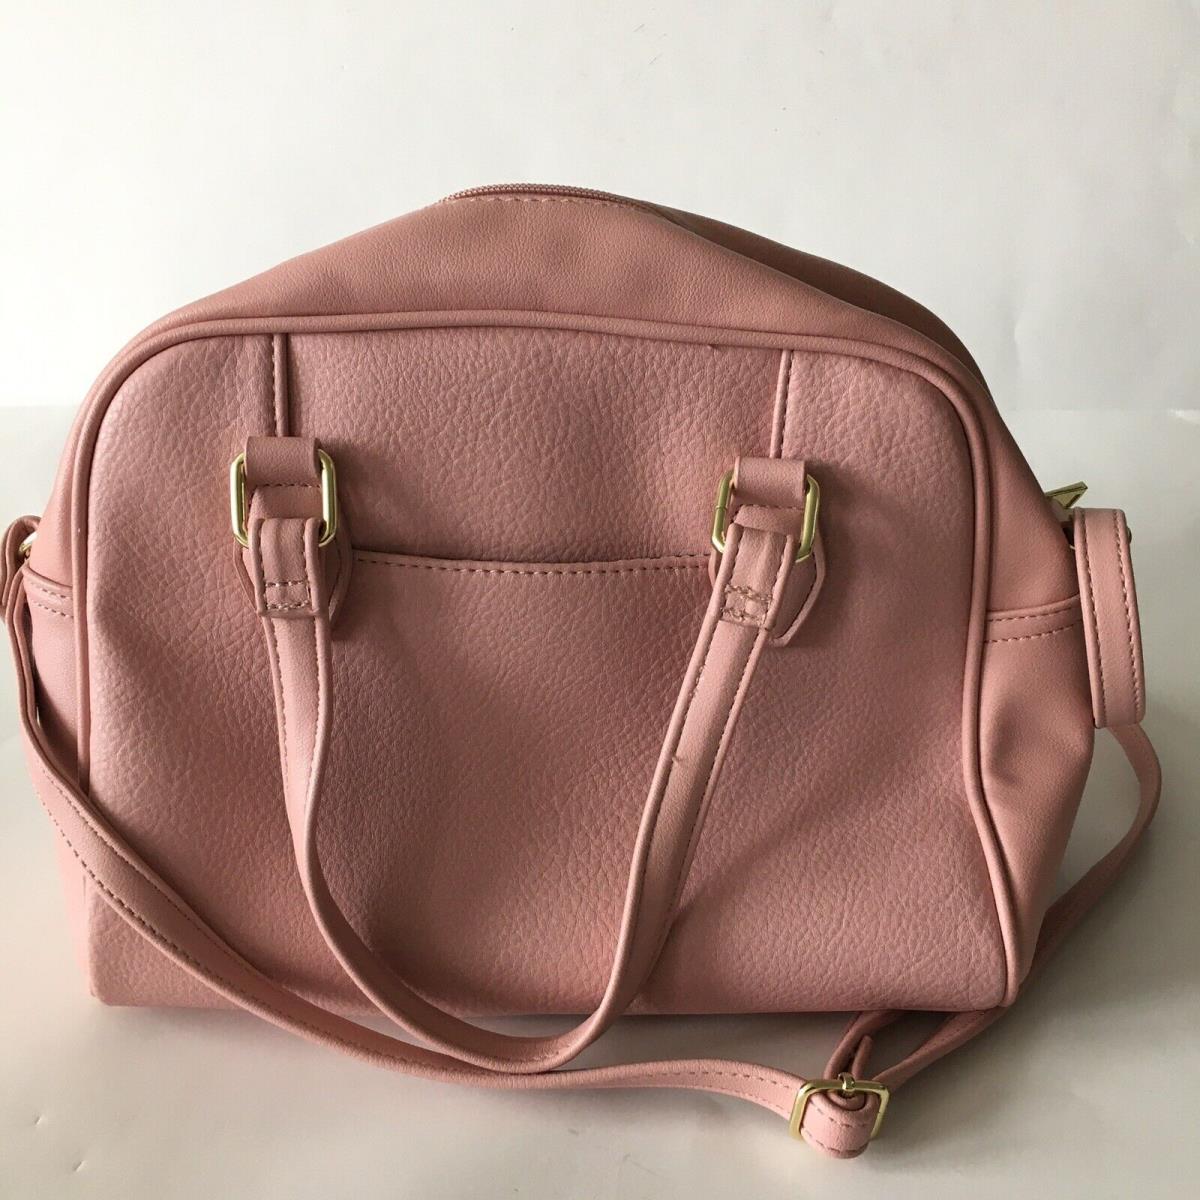 Juicy Couture cross Body Bag | eBay